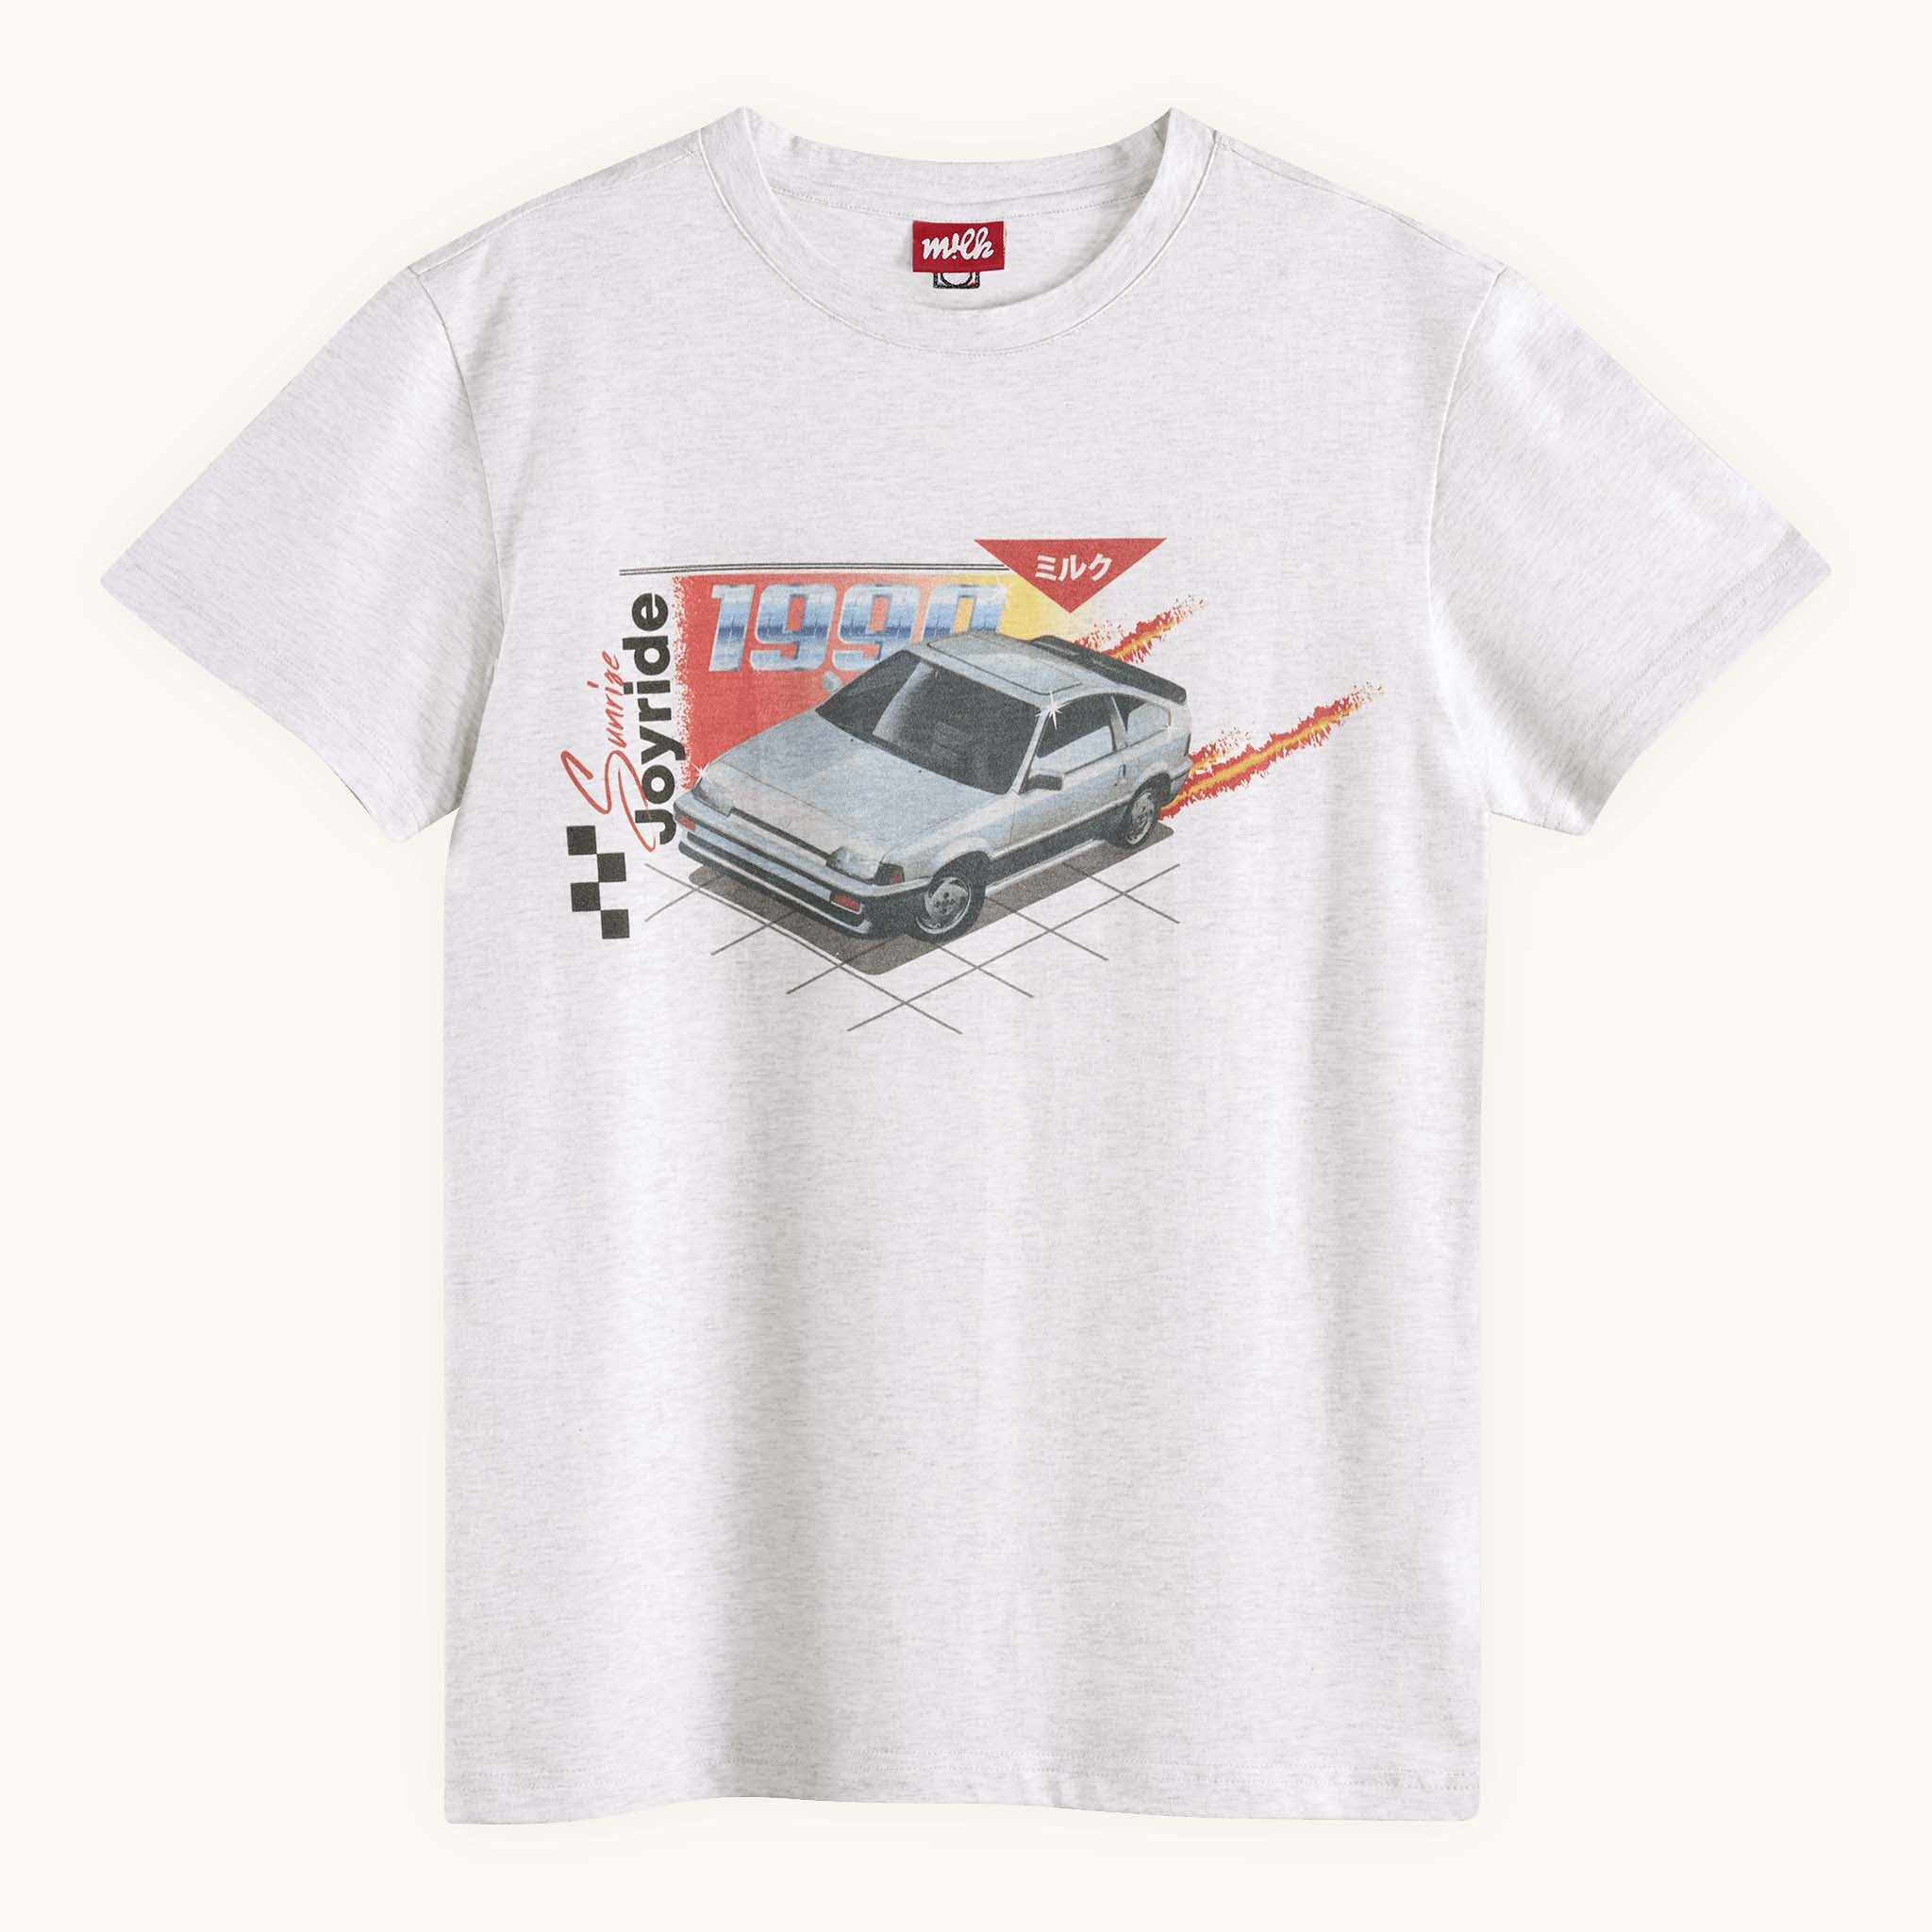 mens white printed vintage style car t-shirt